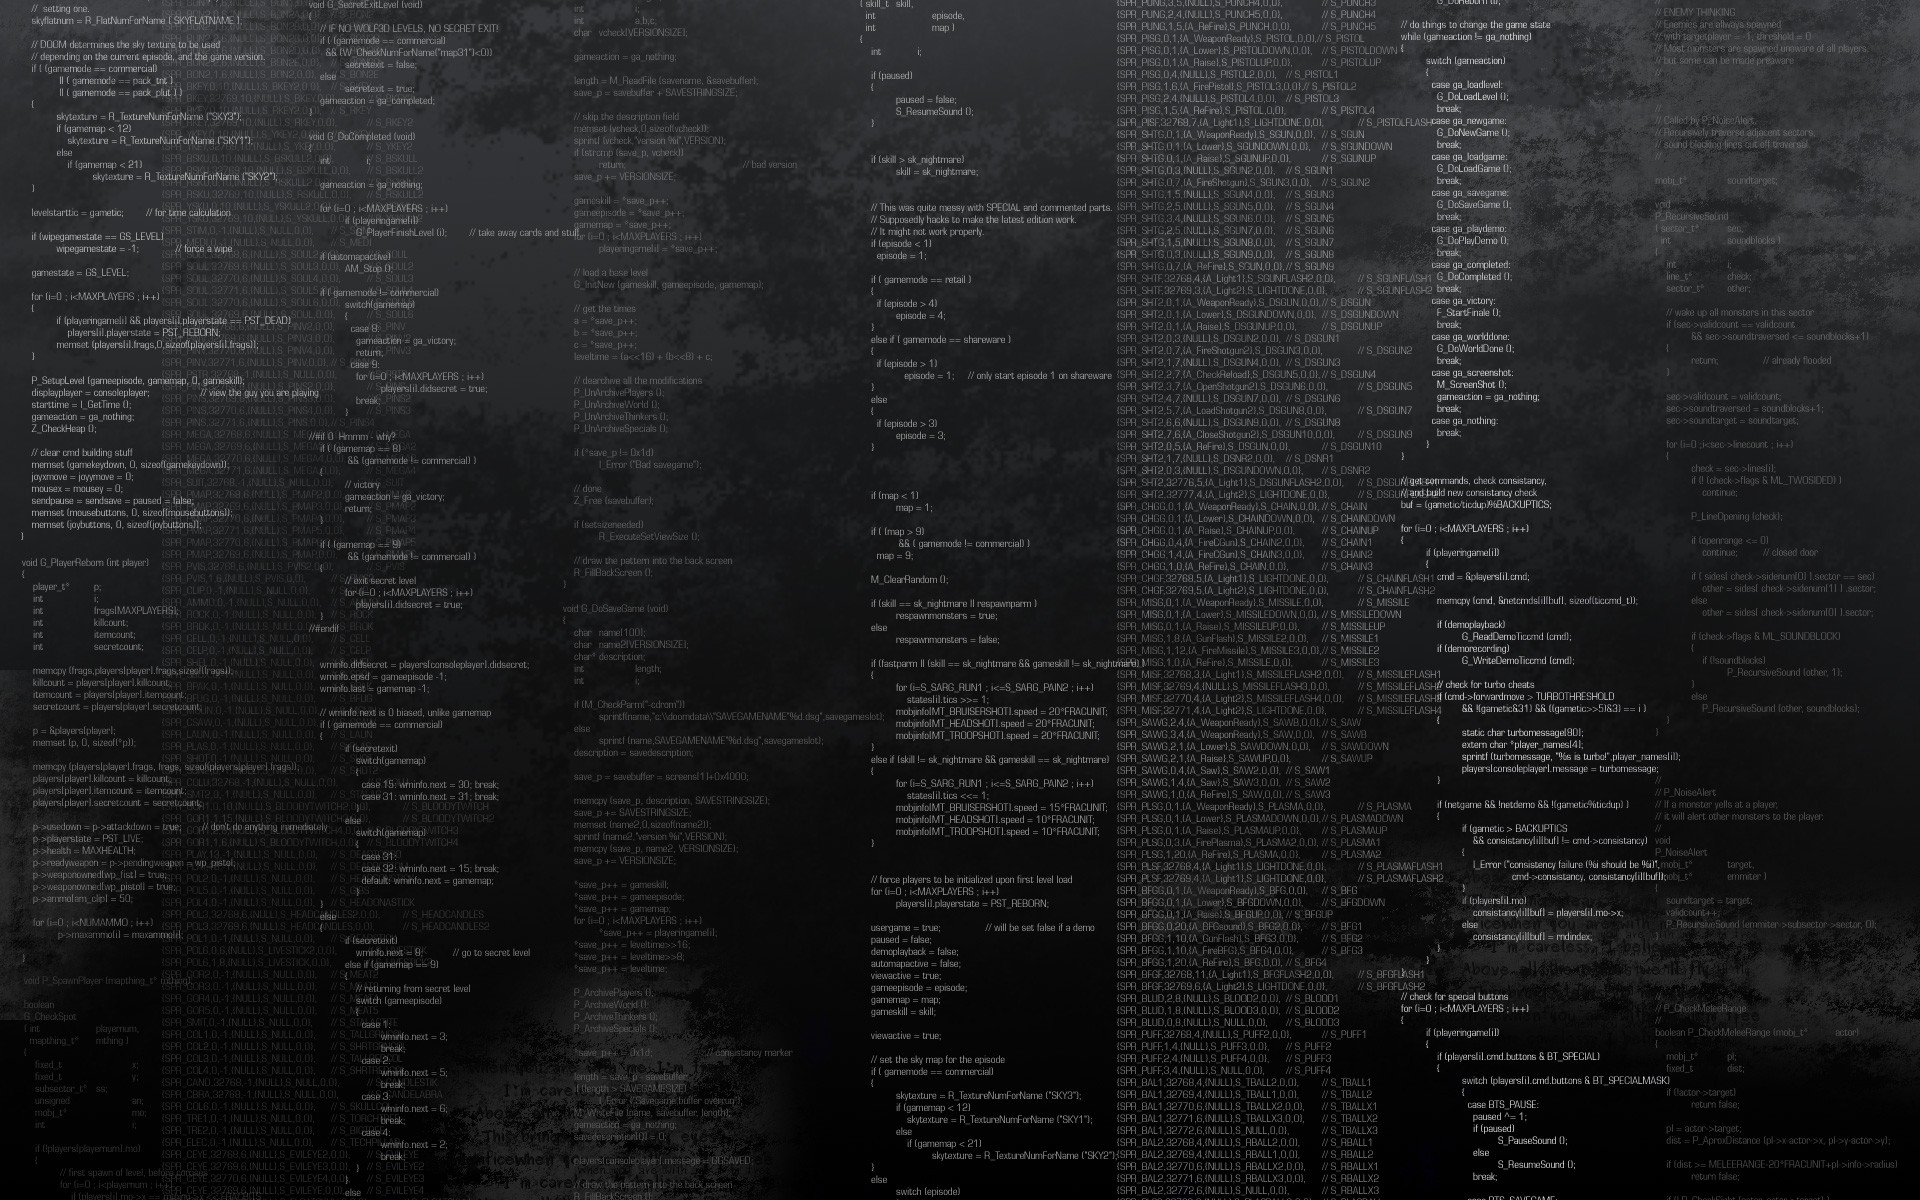 Binary code wallpaper